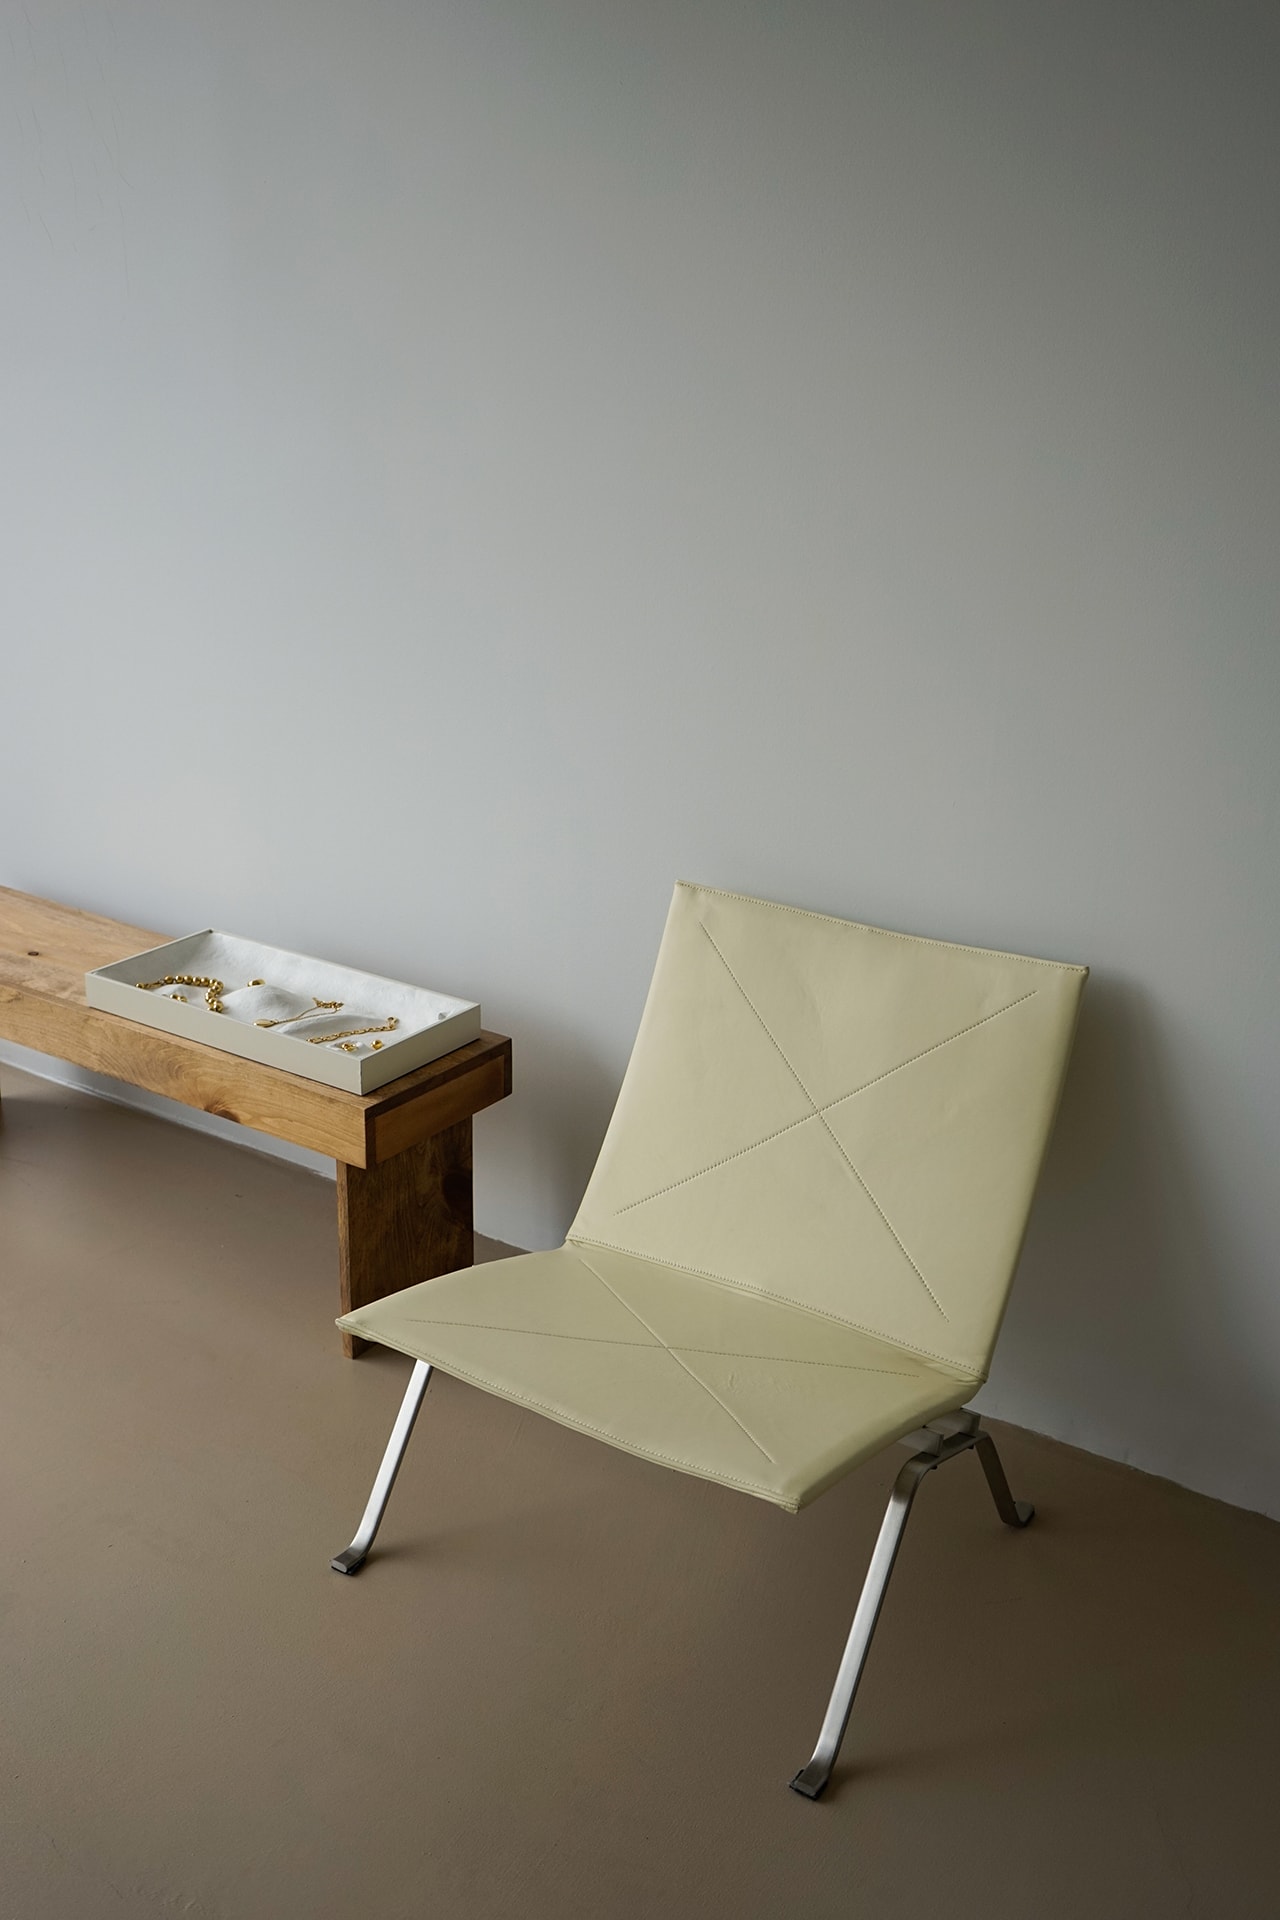 Tase Gallery Jessie Andrews Los Angeles Art Community Retail Space Interior Design Exhibition Furniture Chair